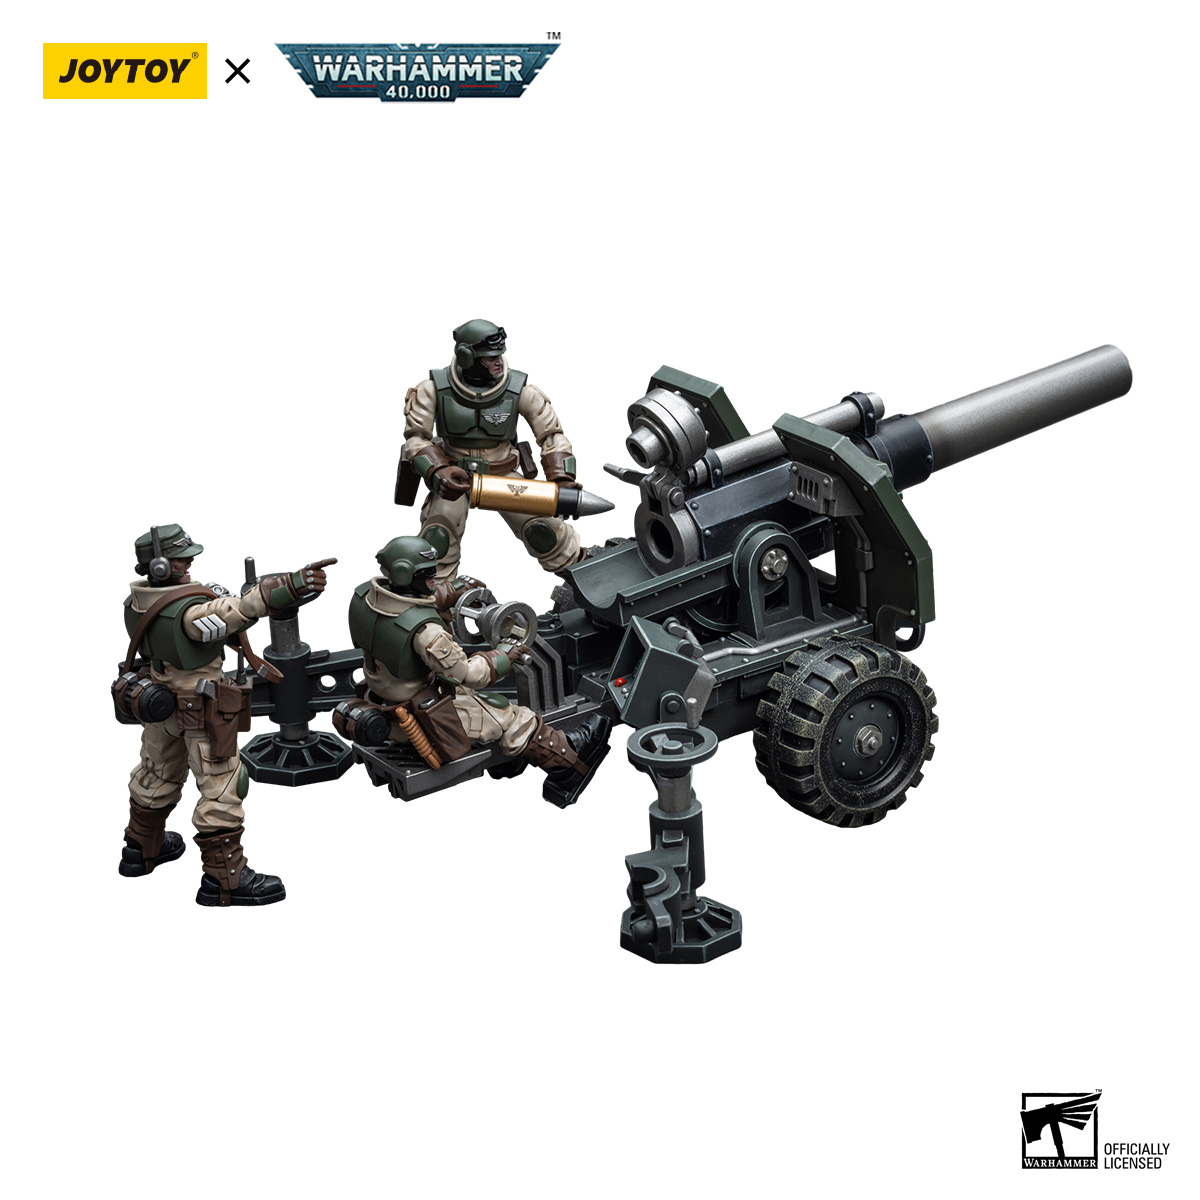 JoyToy Warhammer 40K Astra Militarum Ordnance Team with Bombast Field Gun »  Joytoy Figure